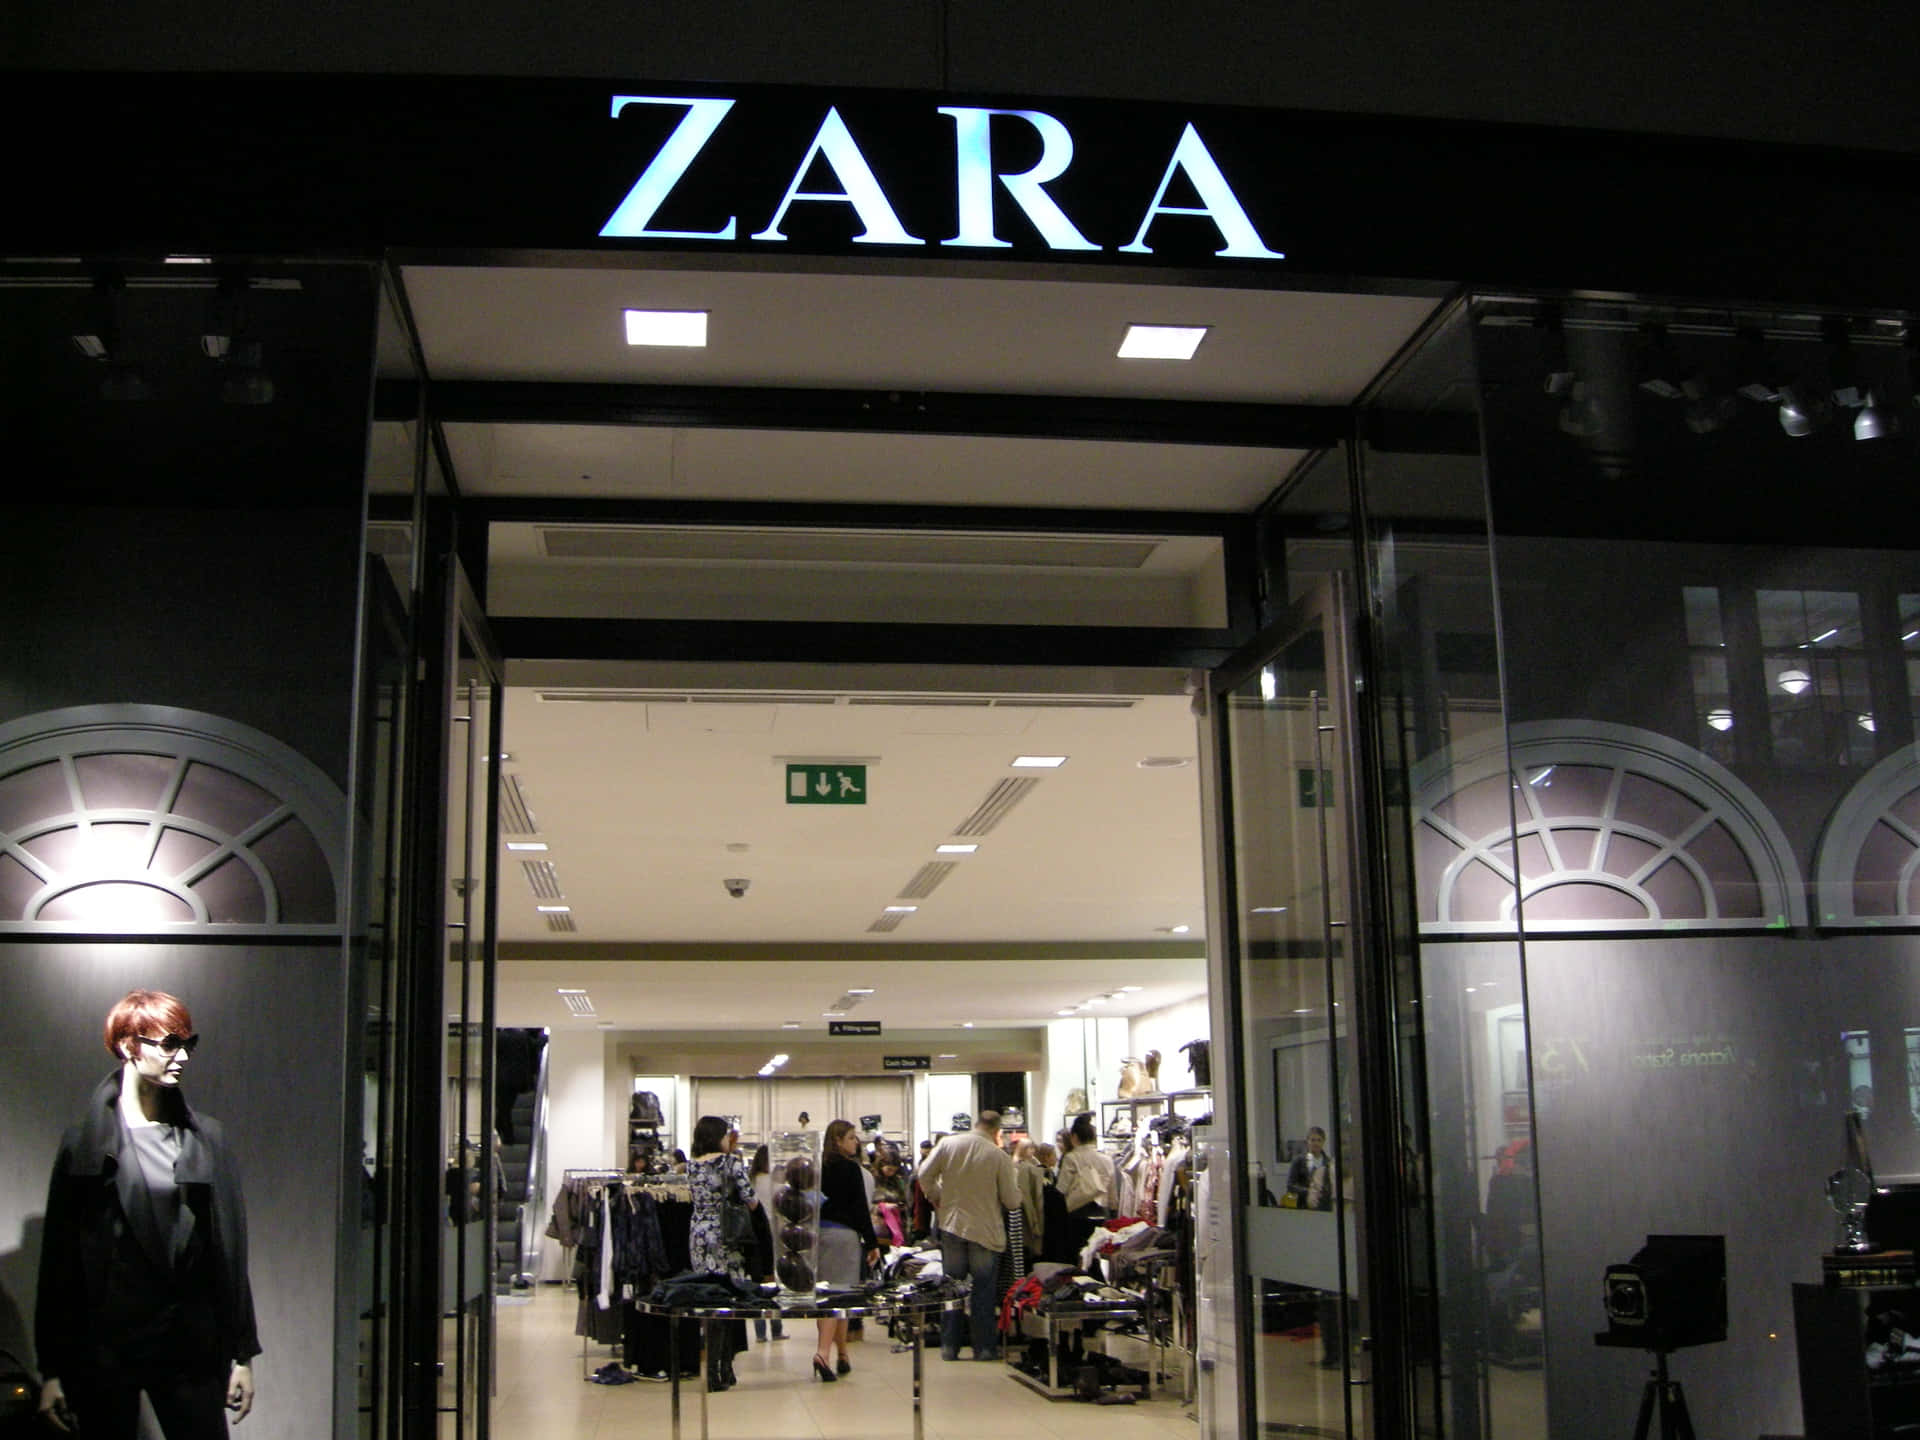 Fashionista rocking the latest Zara look this season